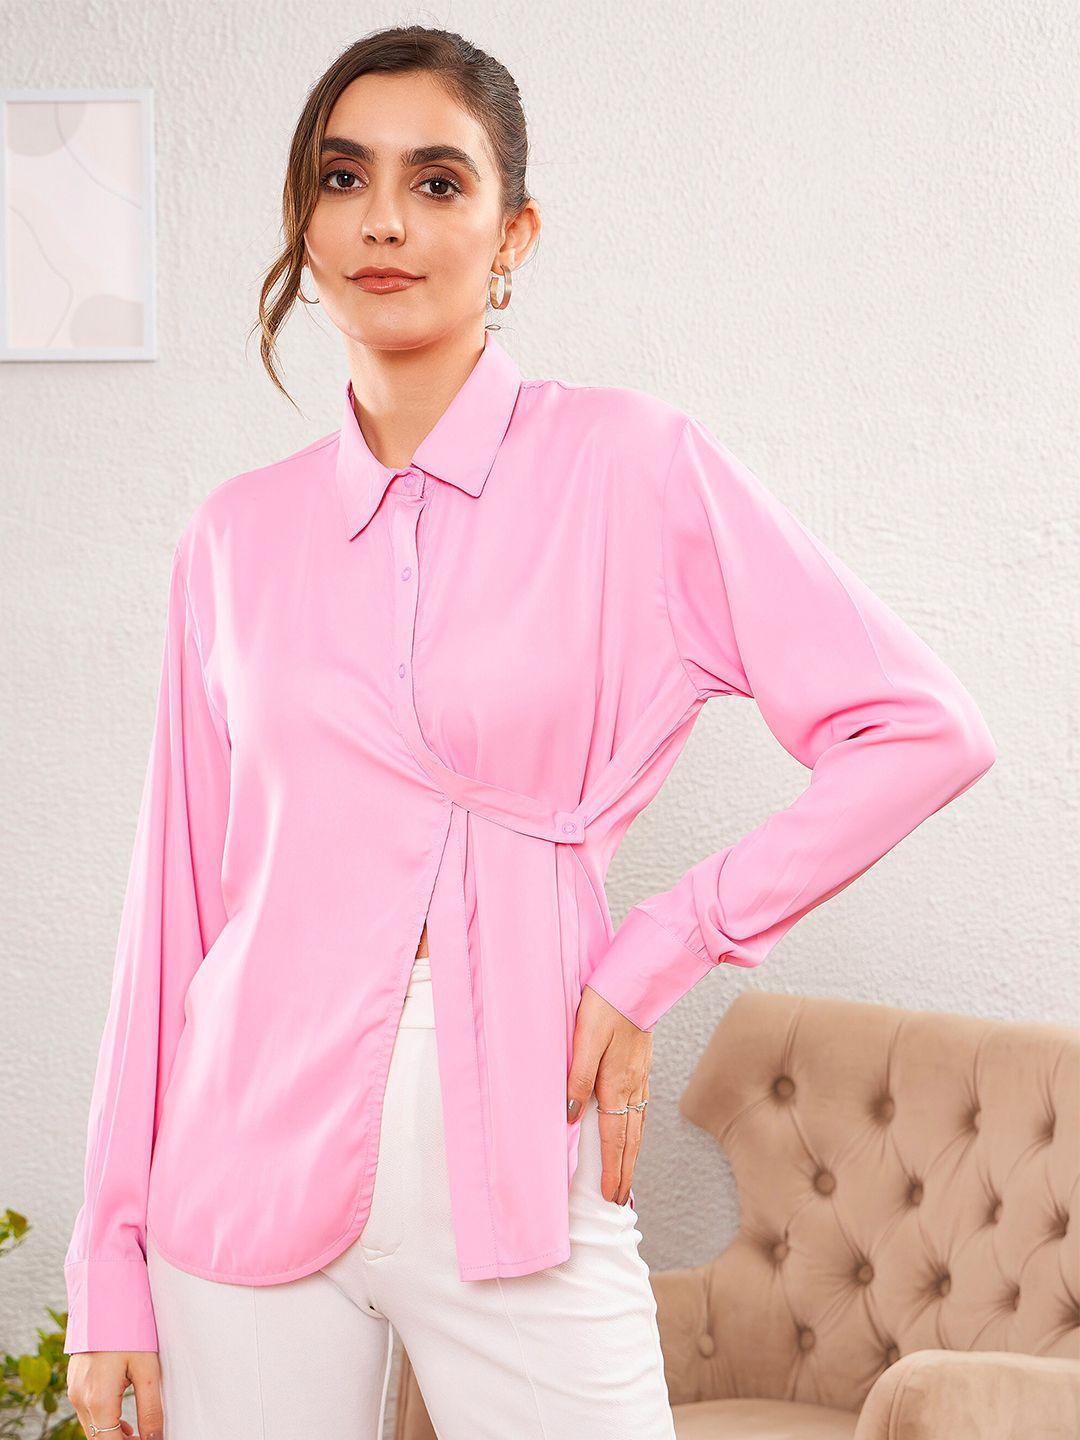 sassafras worklyf women pink opaque formal shirt